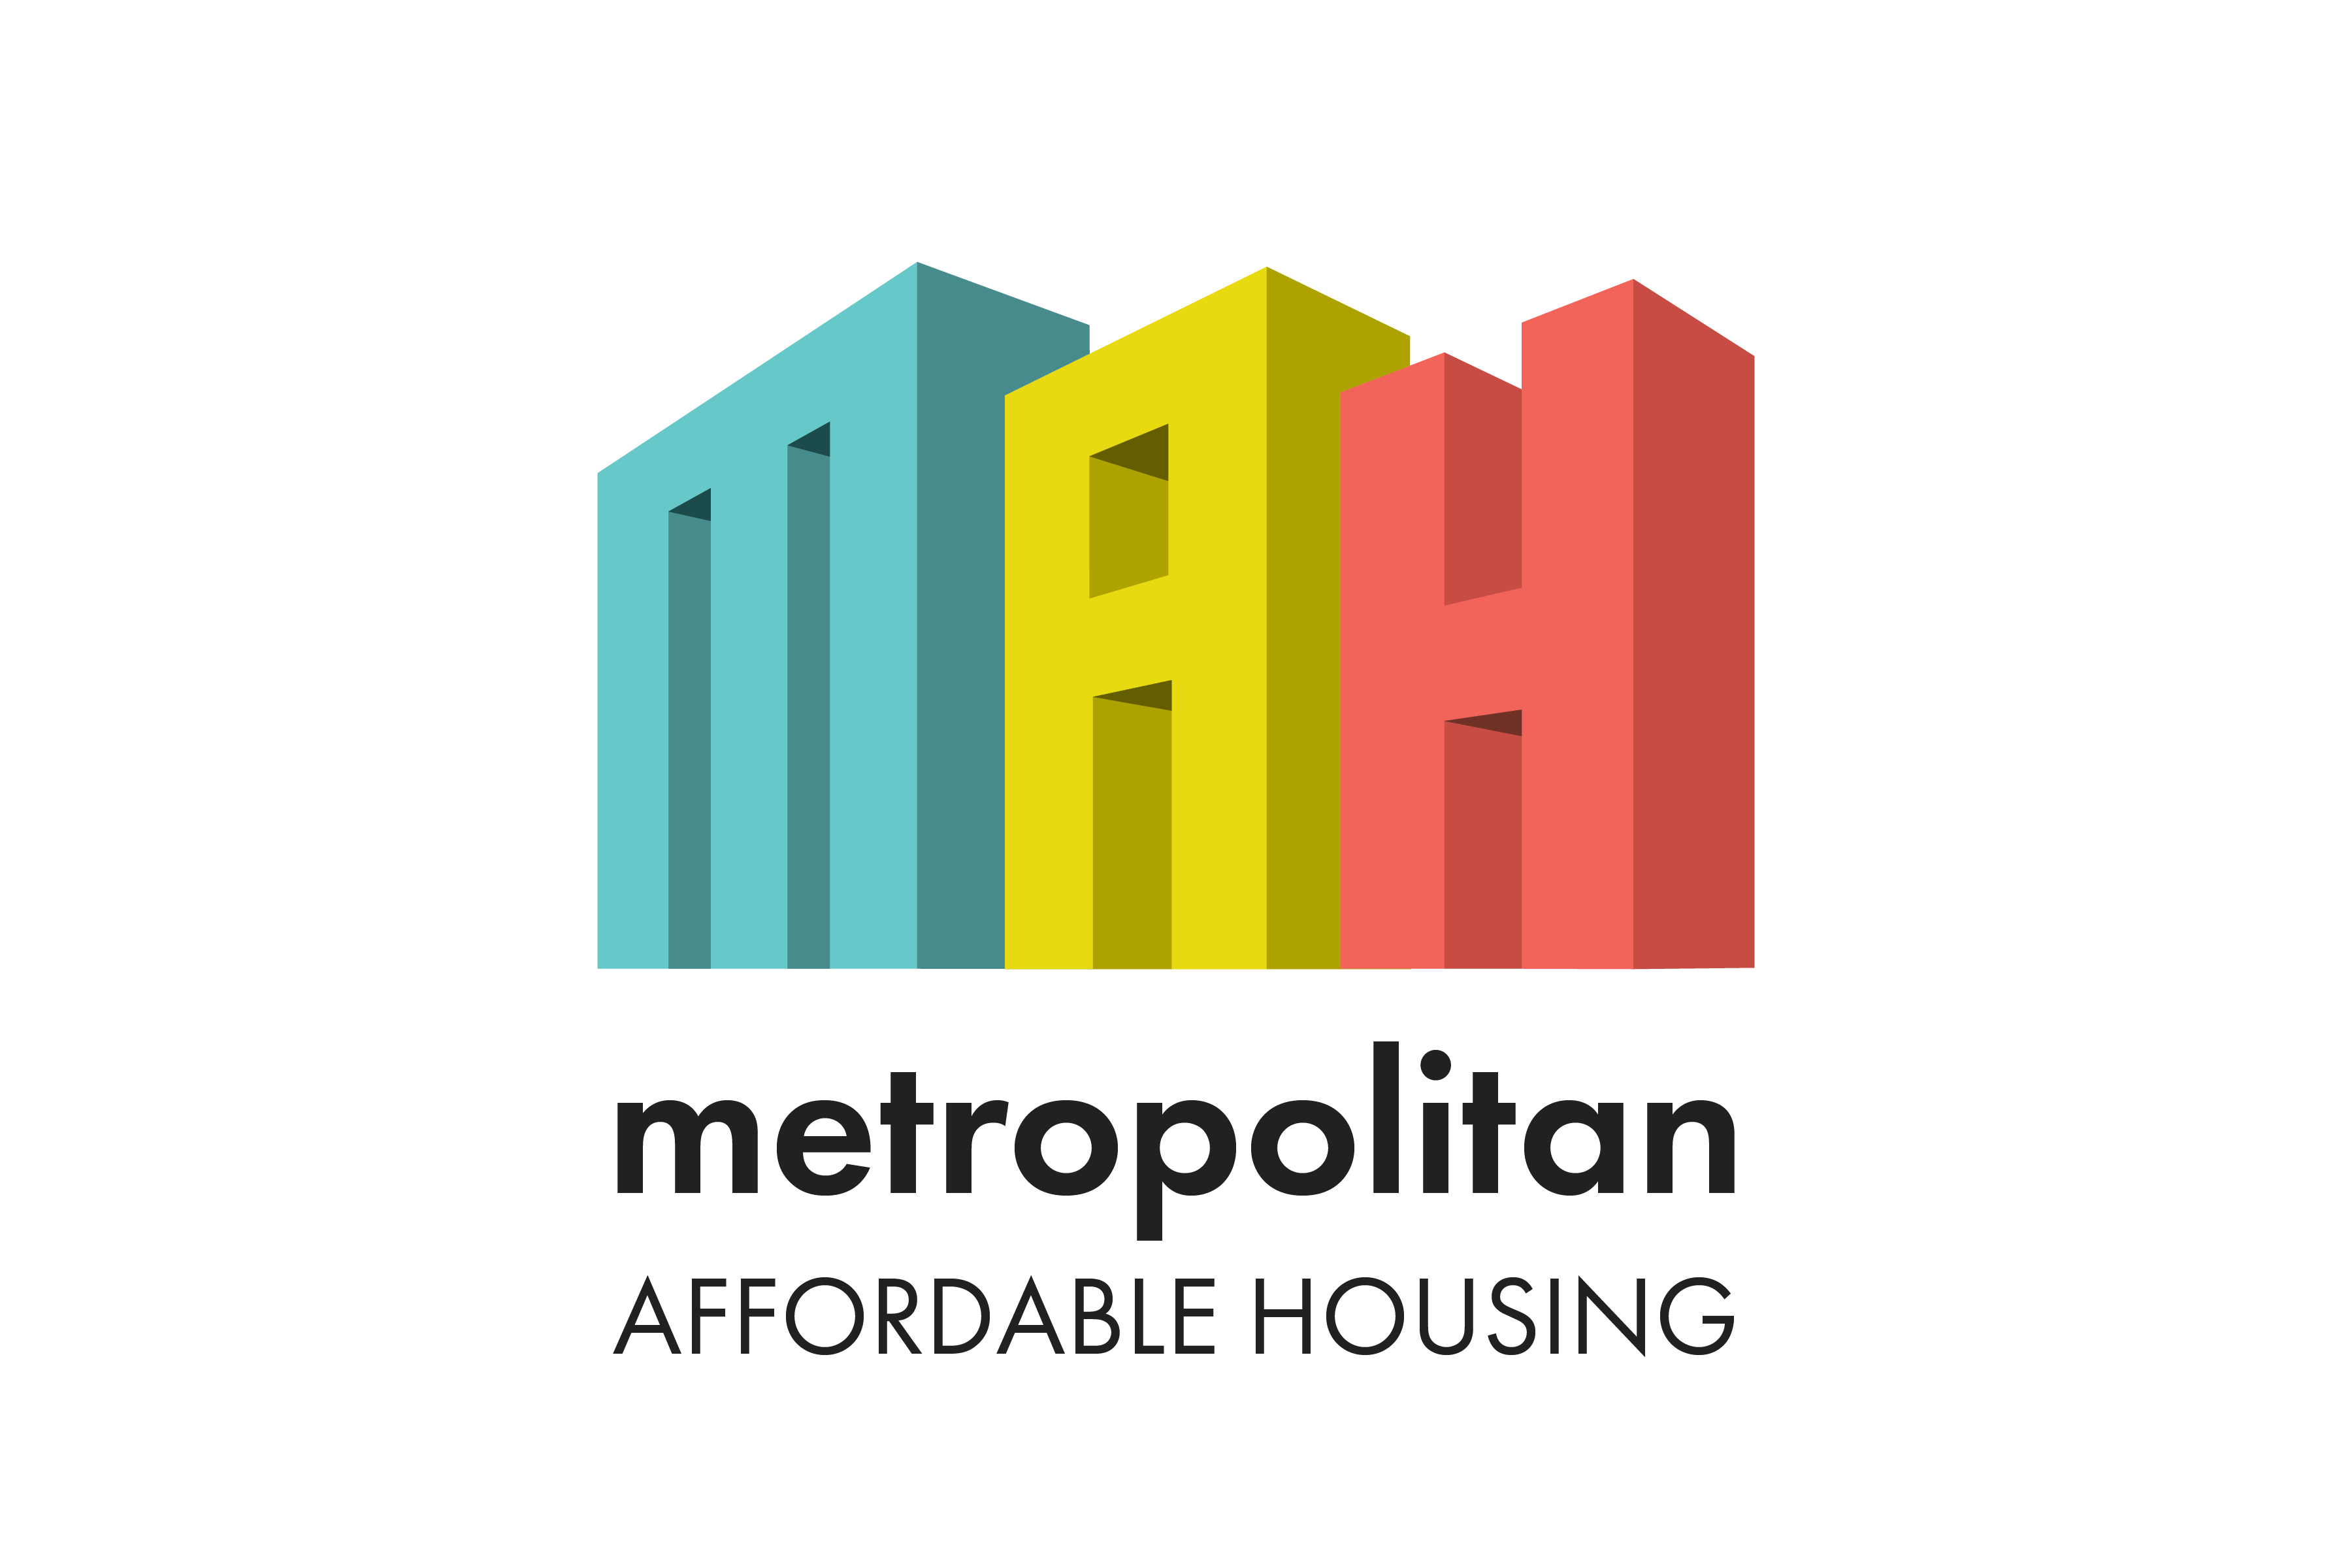 Metropolitan Affordable Housing logo depicting the letters 